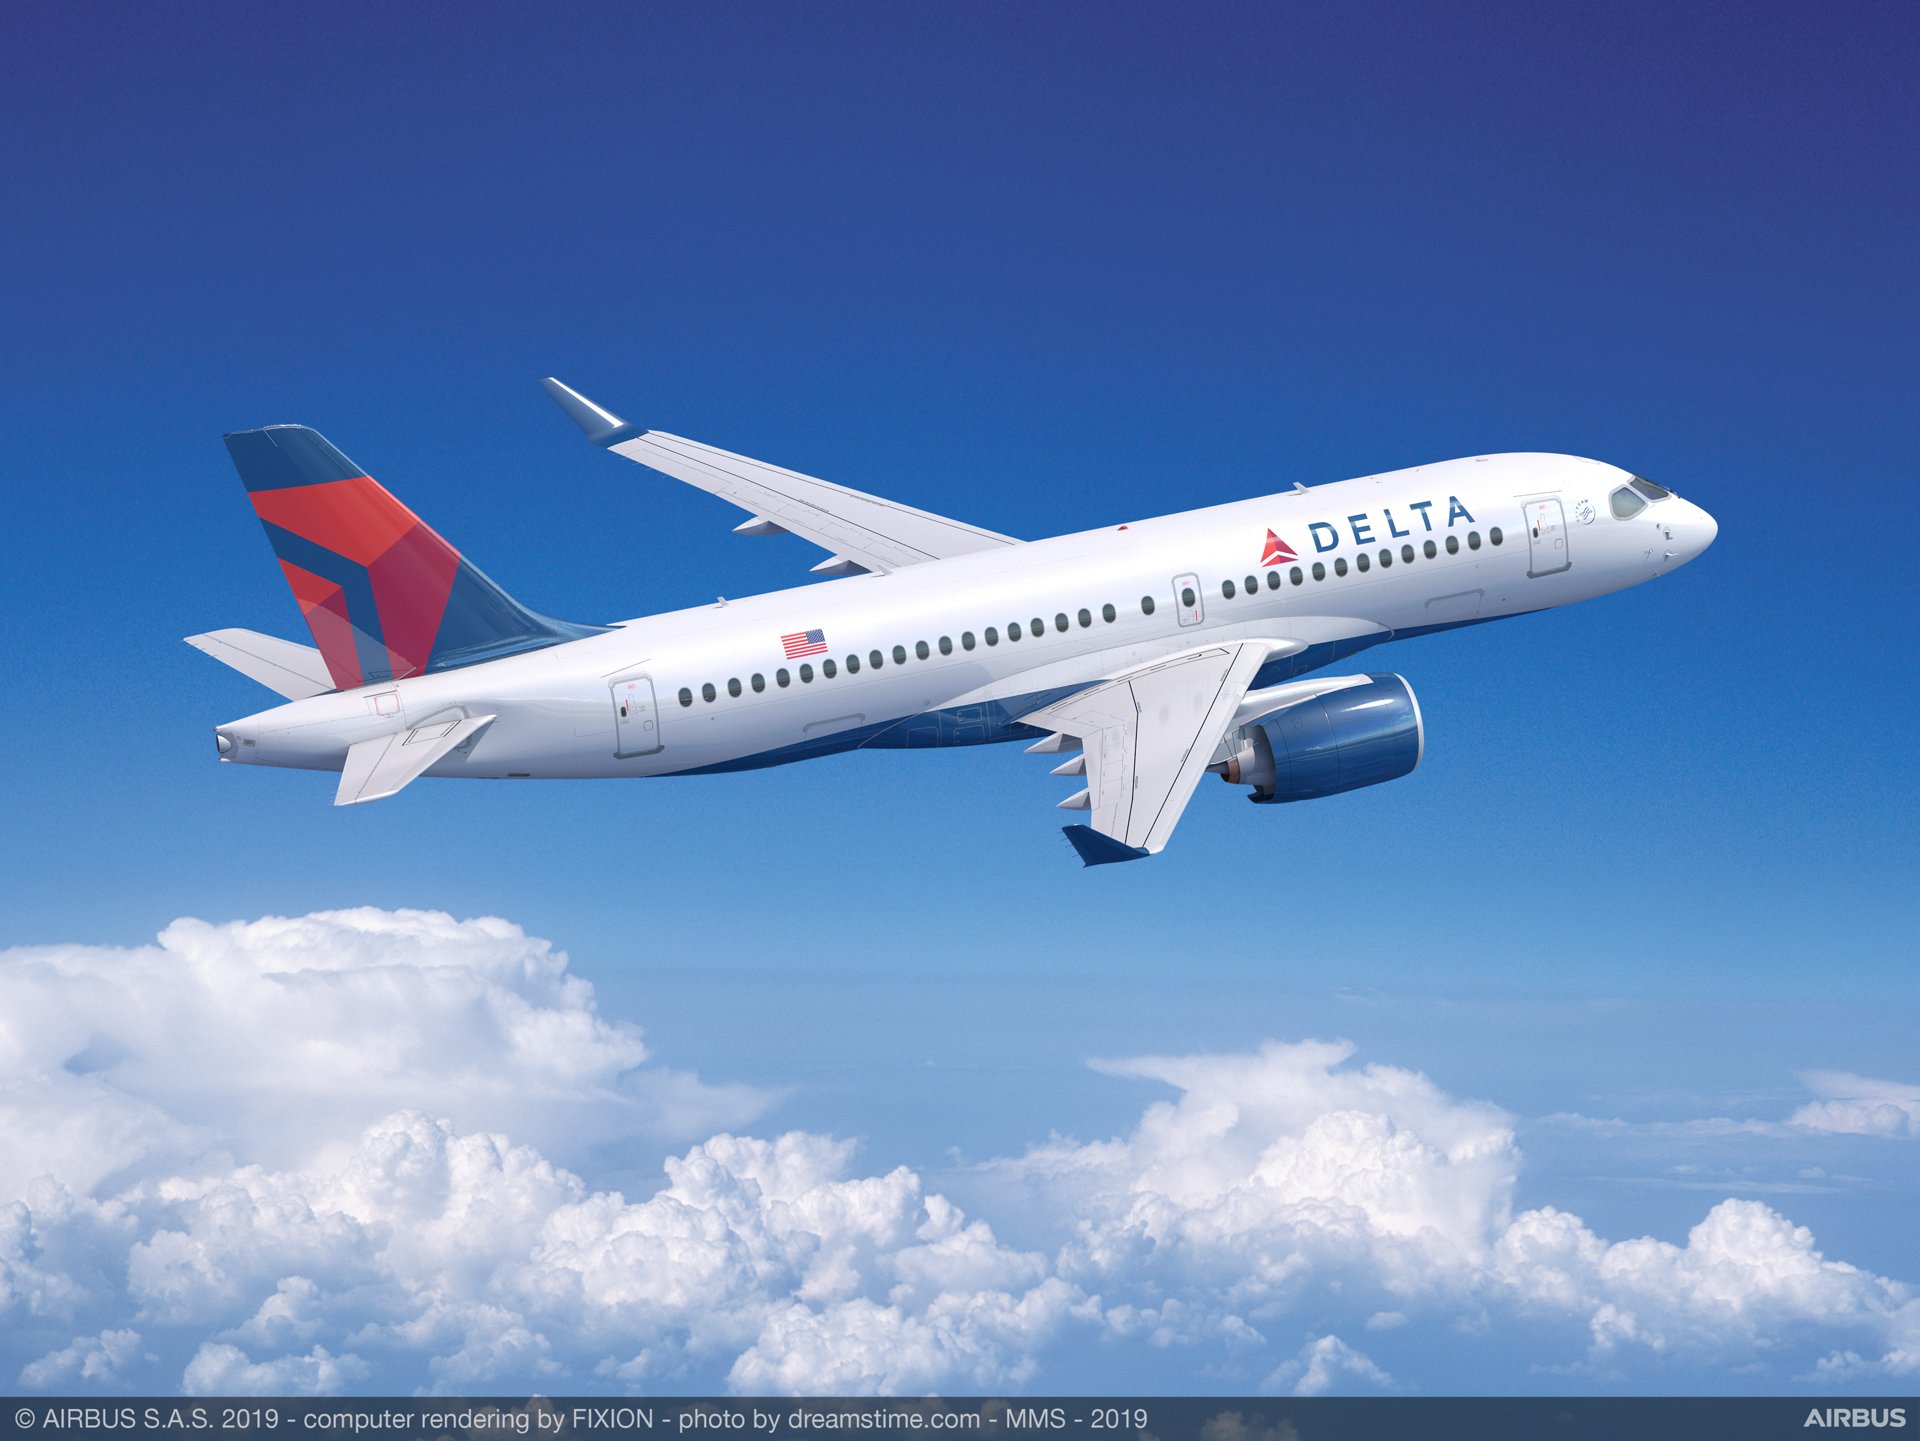 Delta Air Lines commande cinq Airbus A220 supplémentaires ...